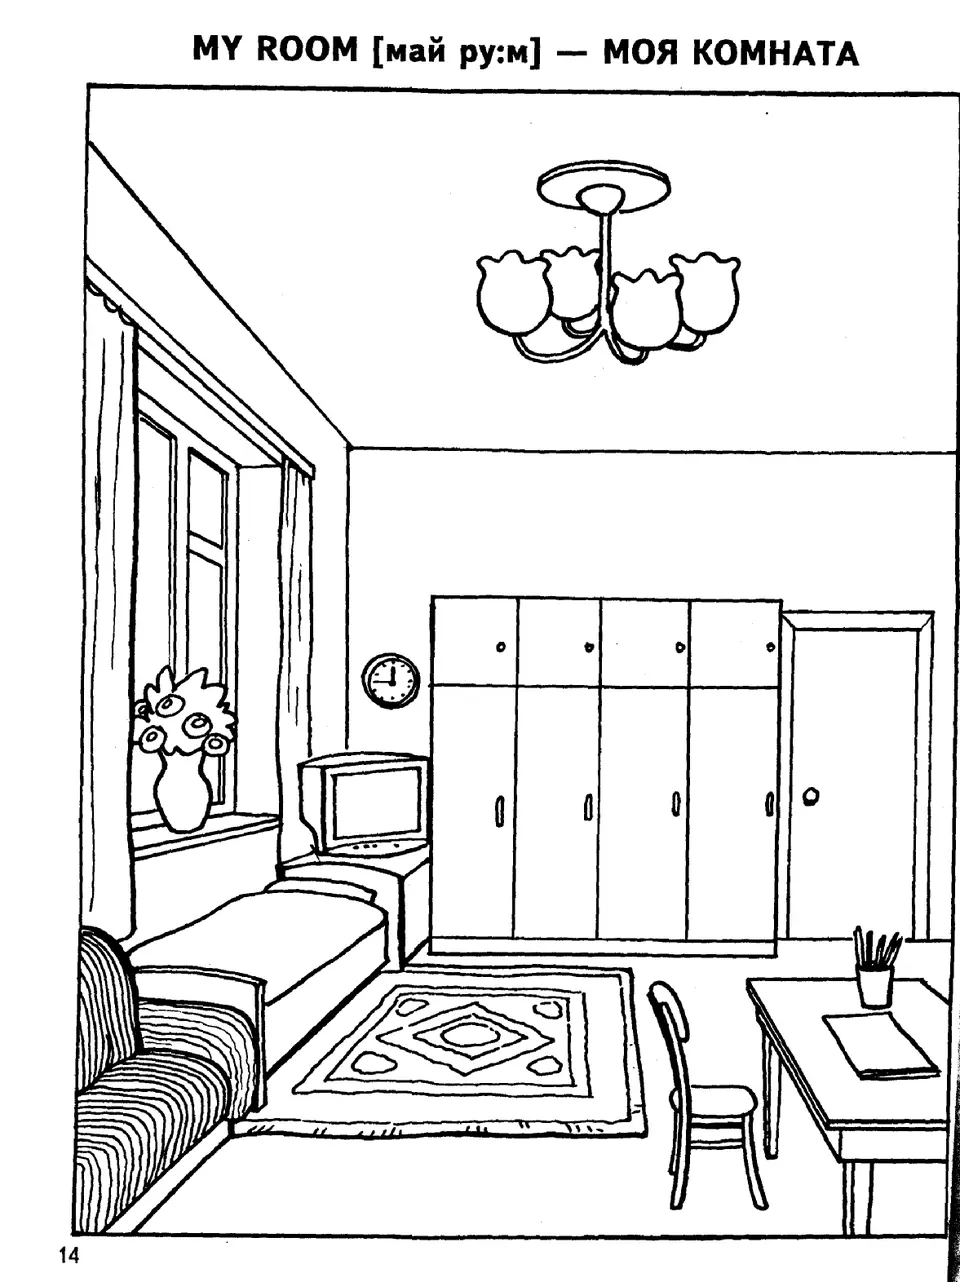 Схема комнаты на английском языке. Интерьер комнаты чертеж. Комната с мебелью рисунок для английского языка. Проект комнаты с мебелью.